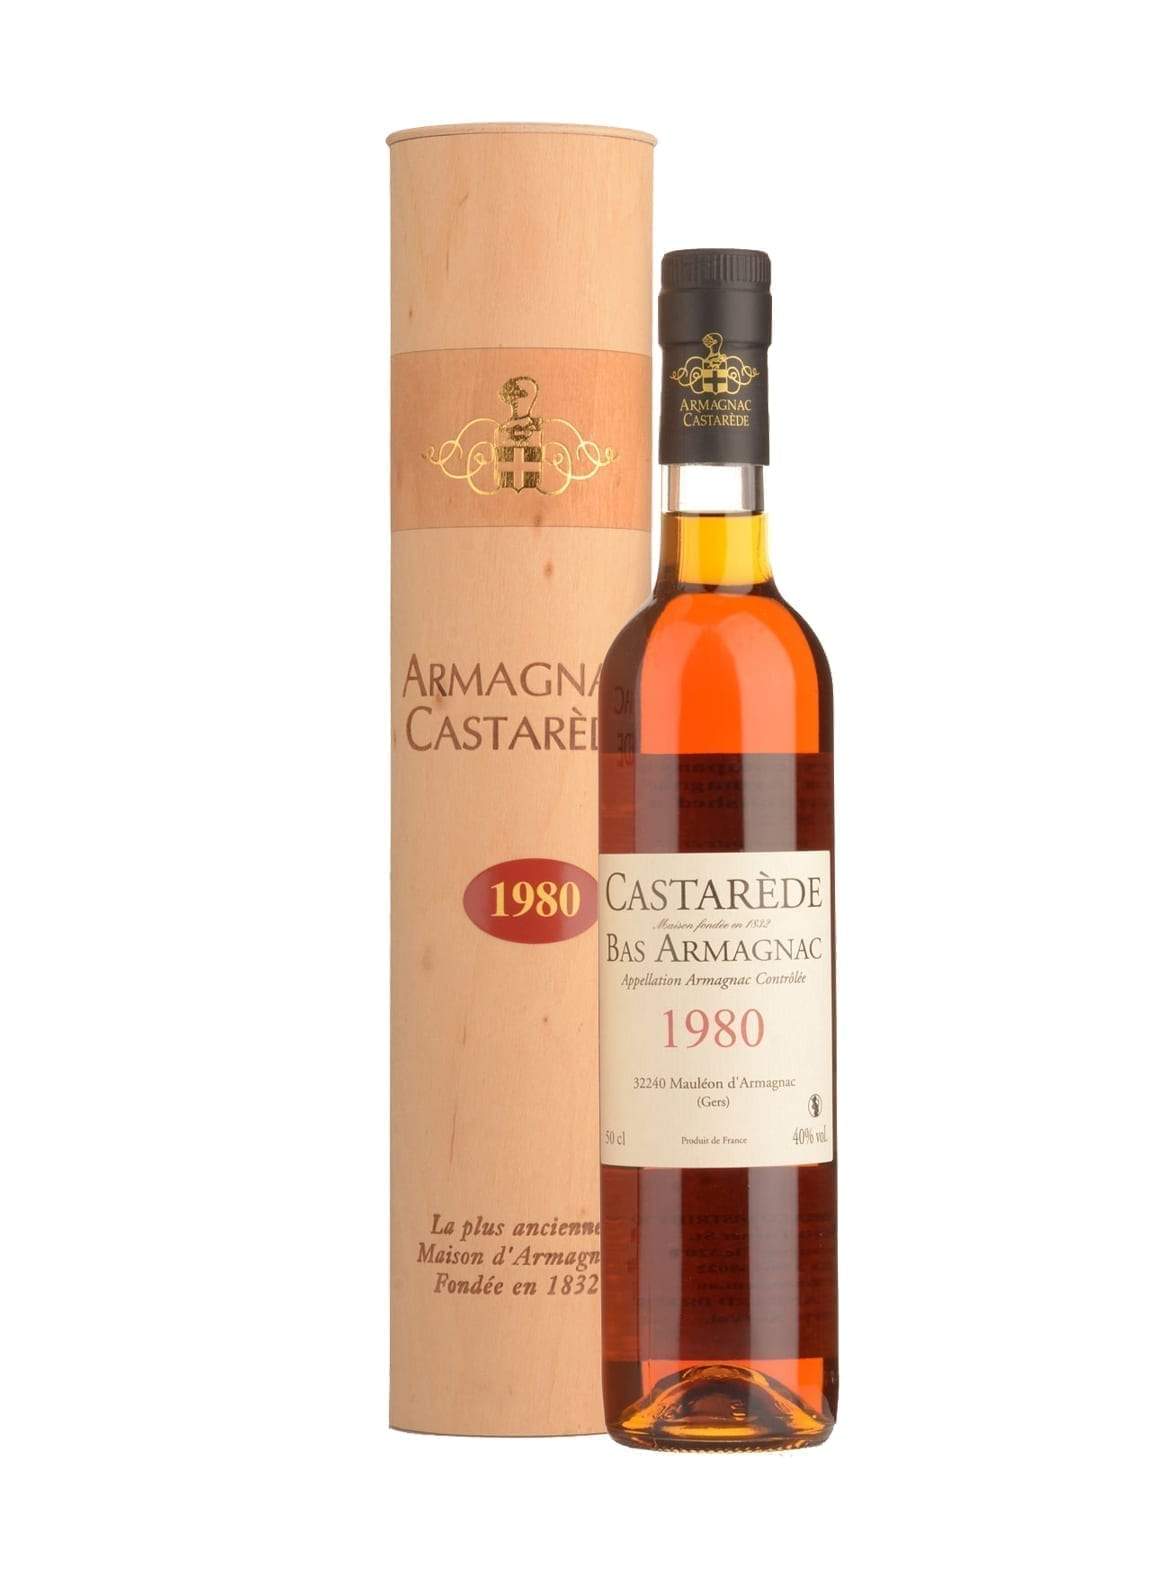 Castarede 1980 Armagnac 40% 500ml | Brandy | Shop online at Spirits of France